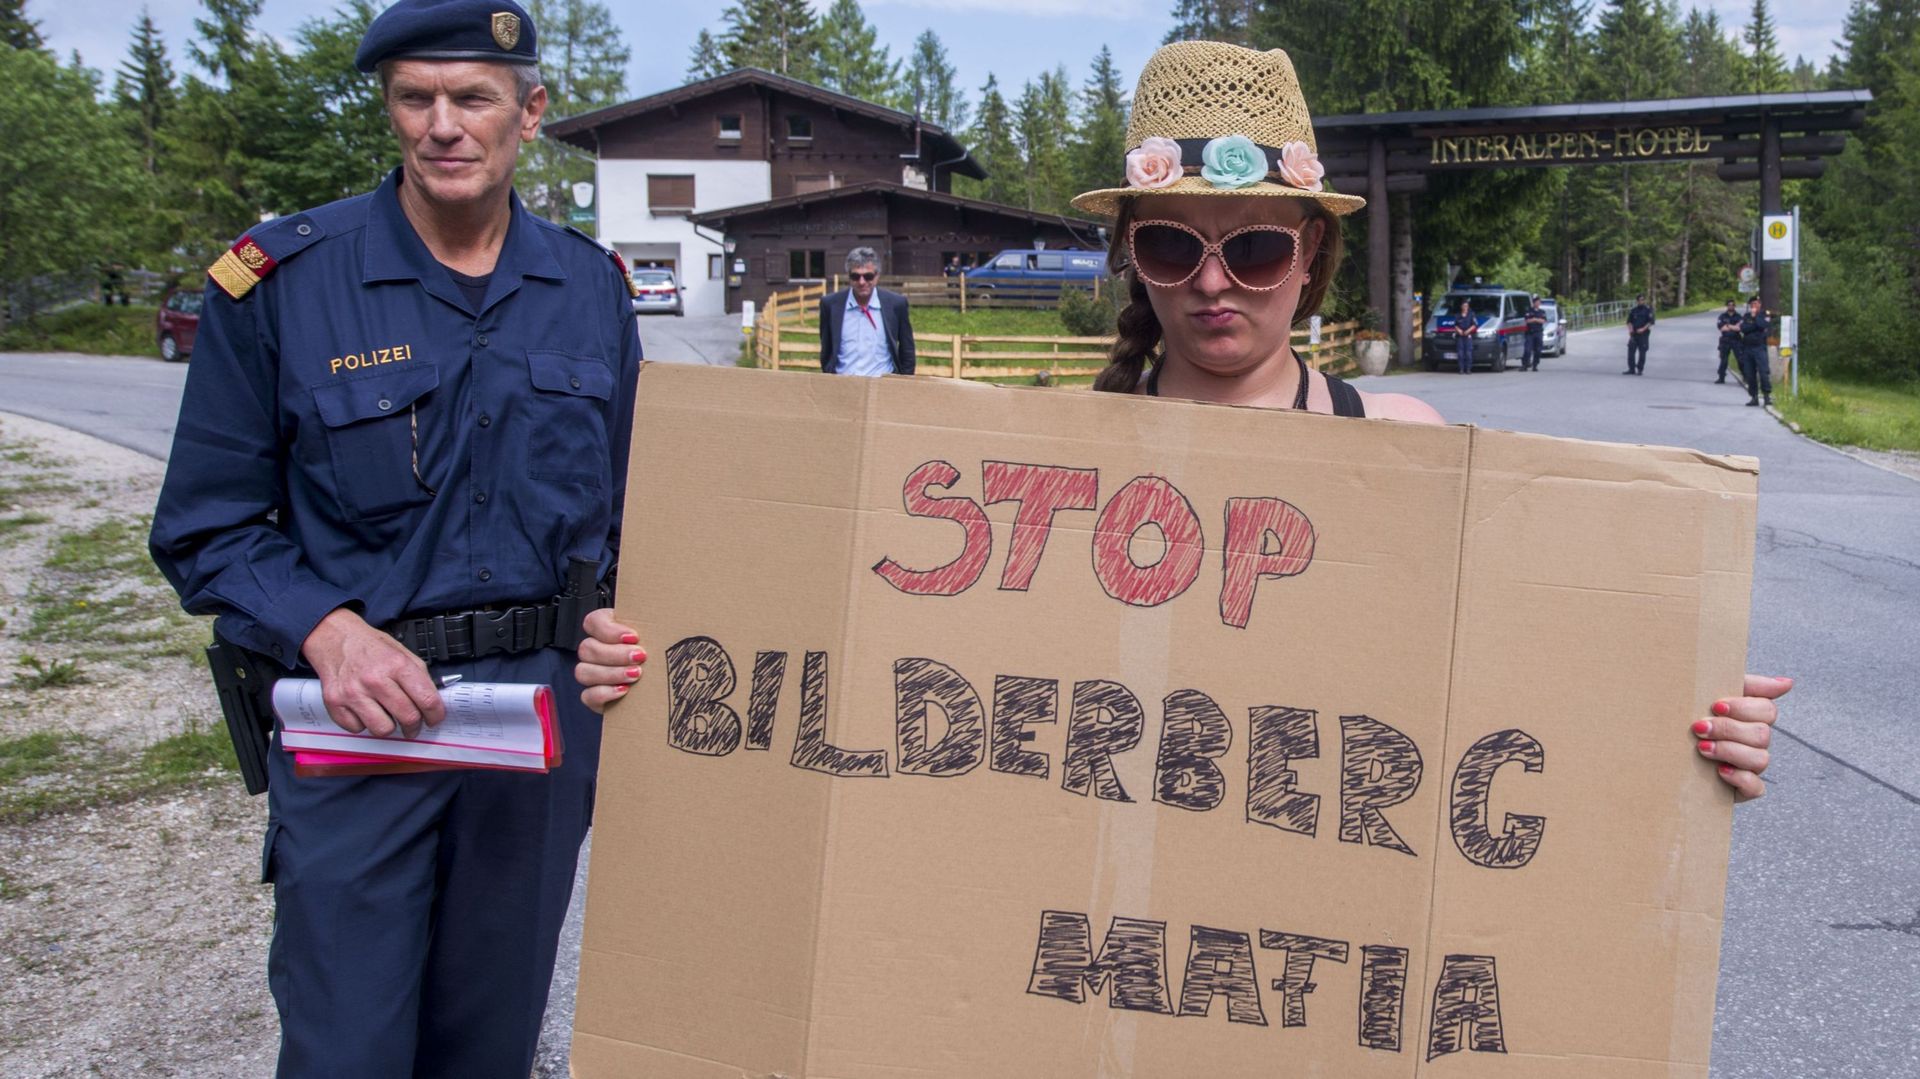 Chaque année, des manifestants s'opposent au sommet de Bilderberg